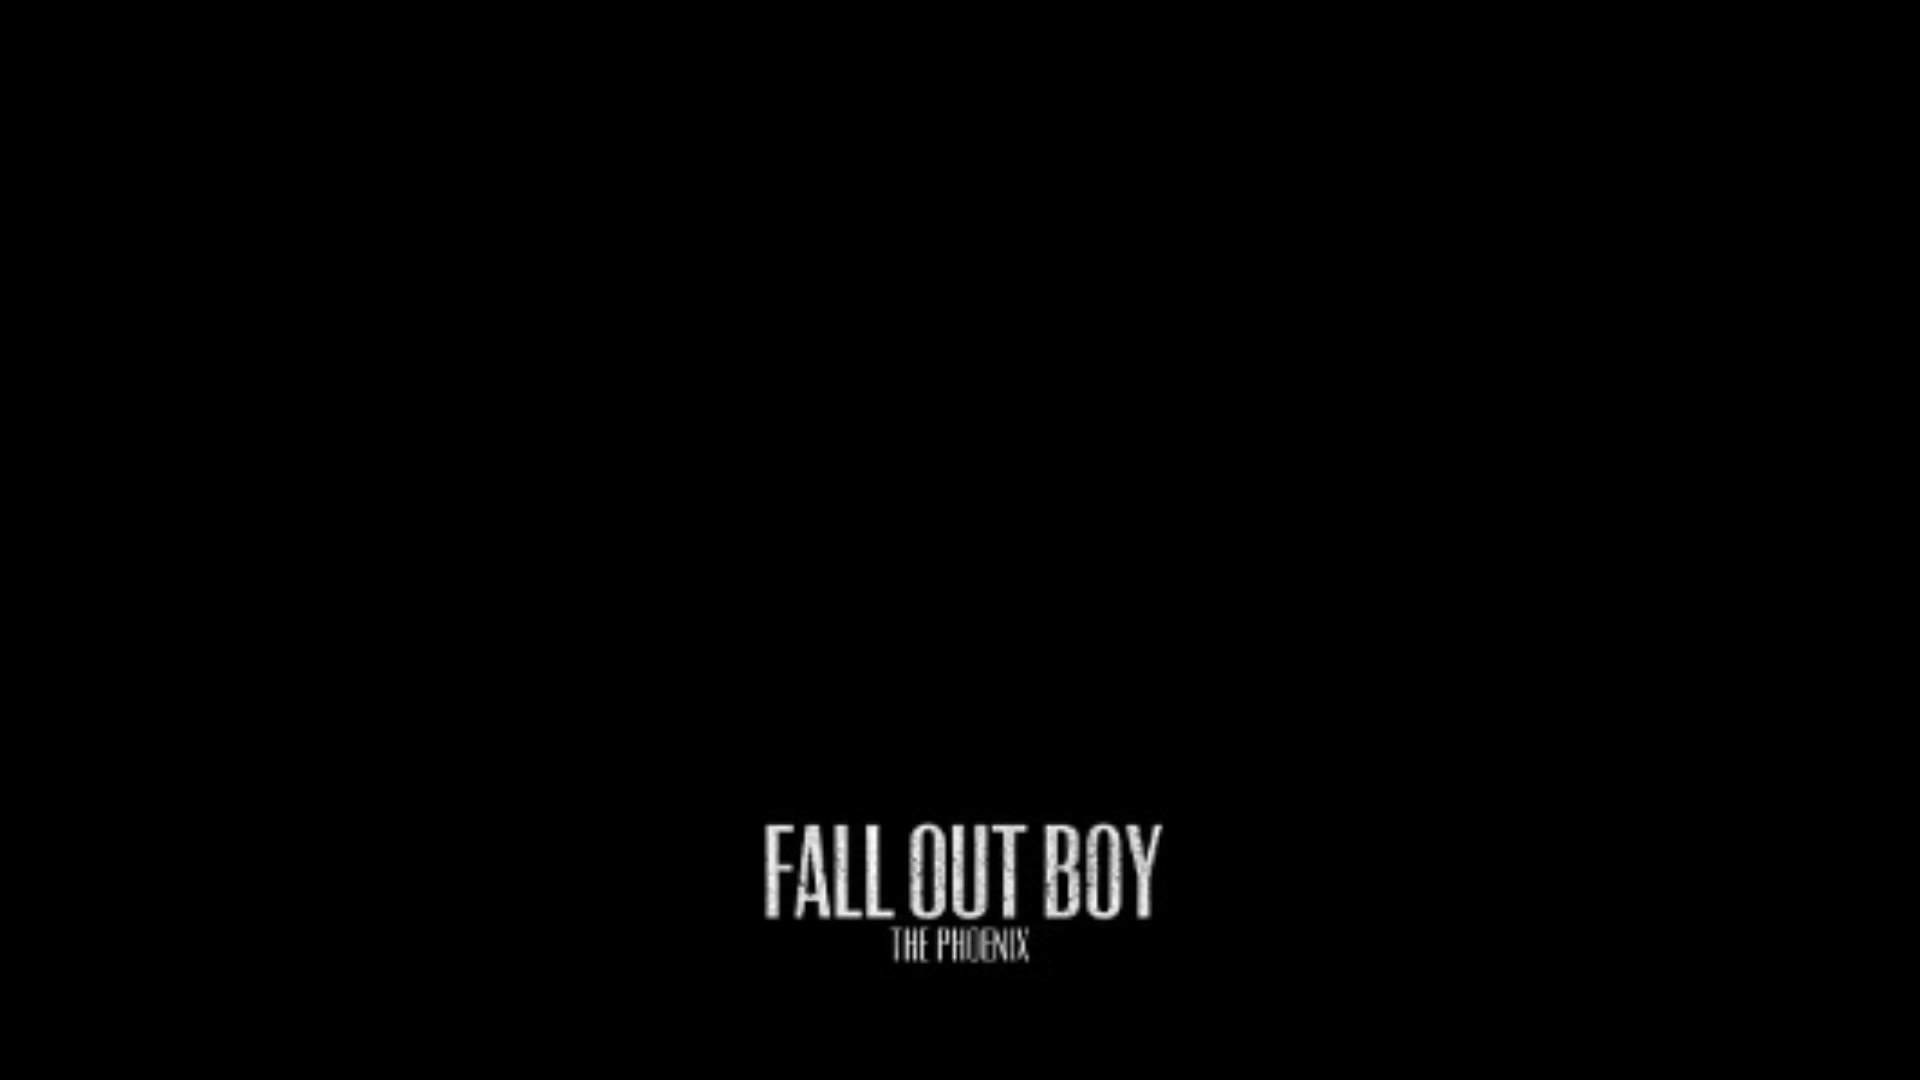 1920x1080 The Phoenix Lyrics - Fall Out Boy (HD)